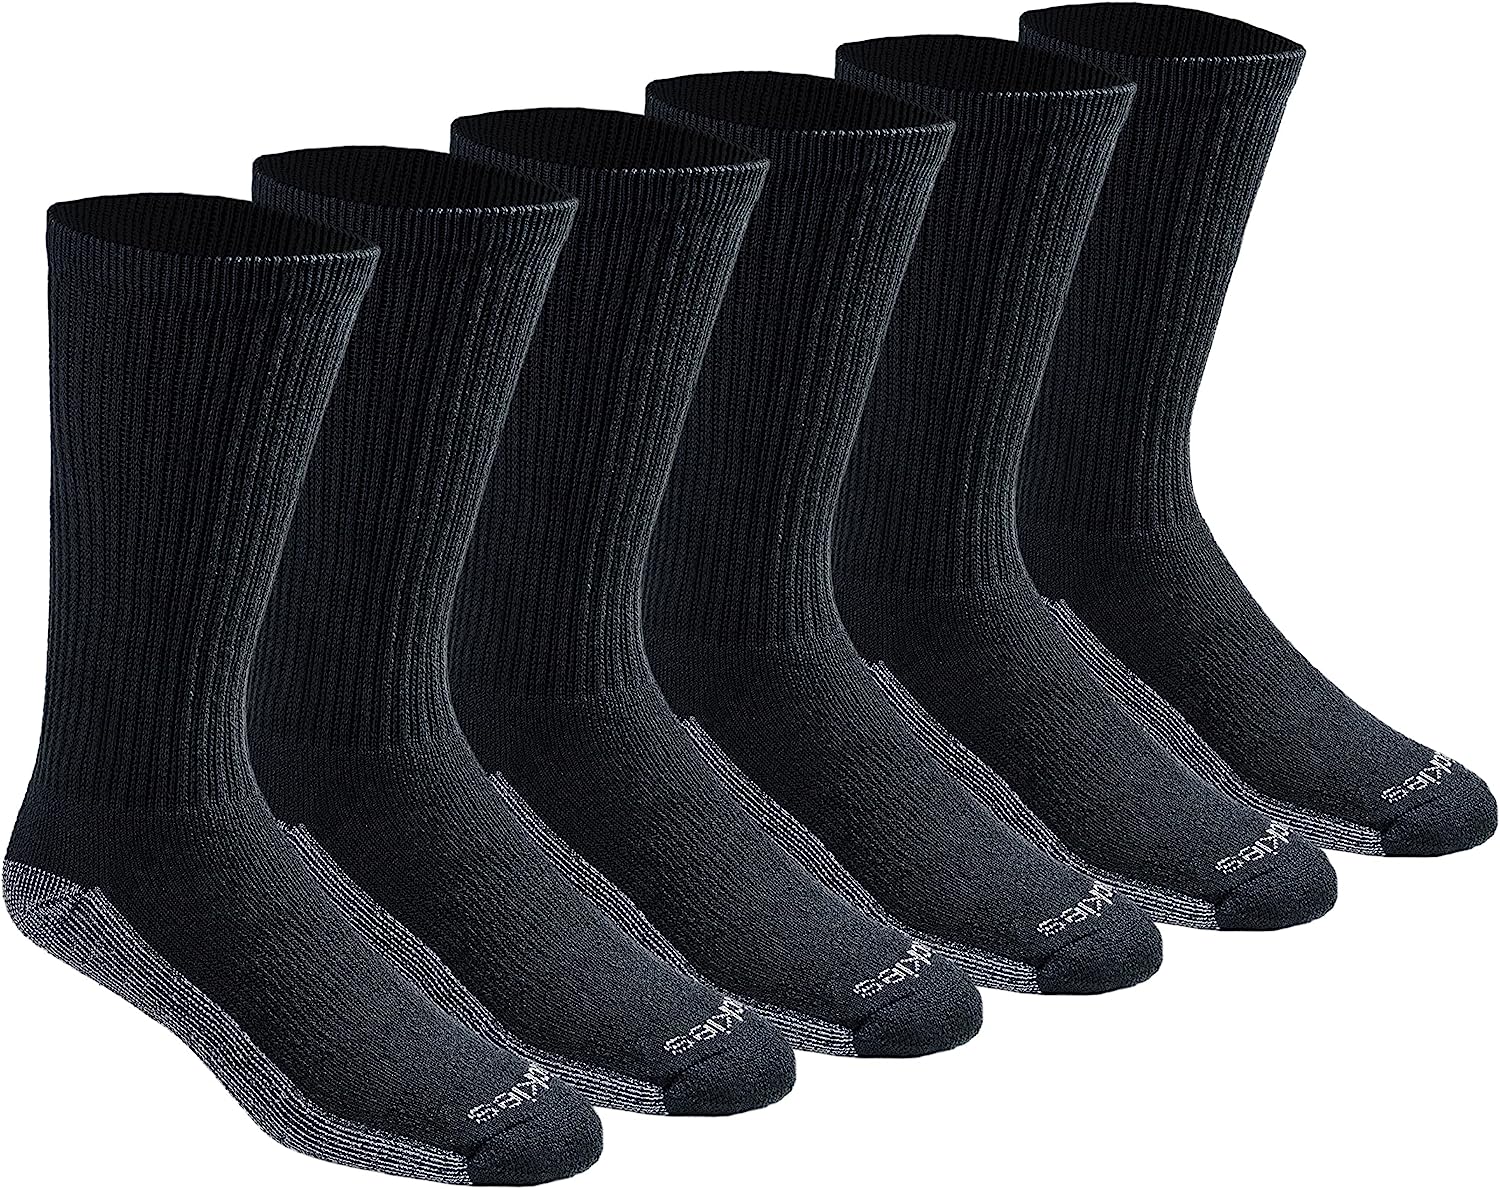 mens boot socks product comparison